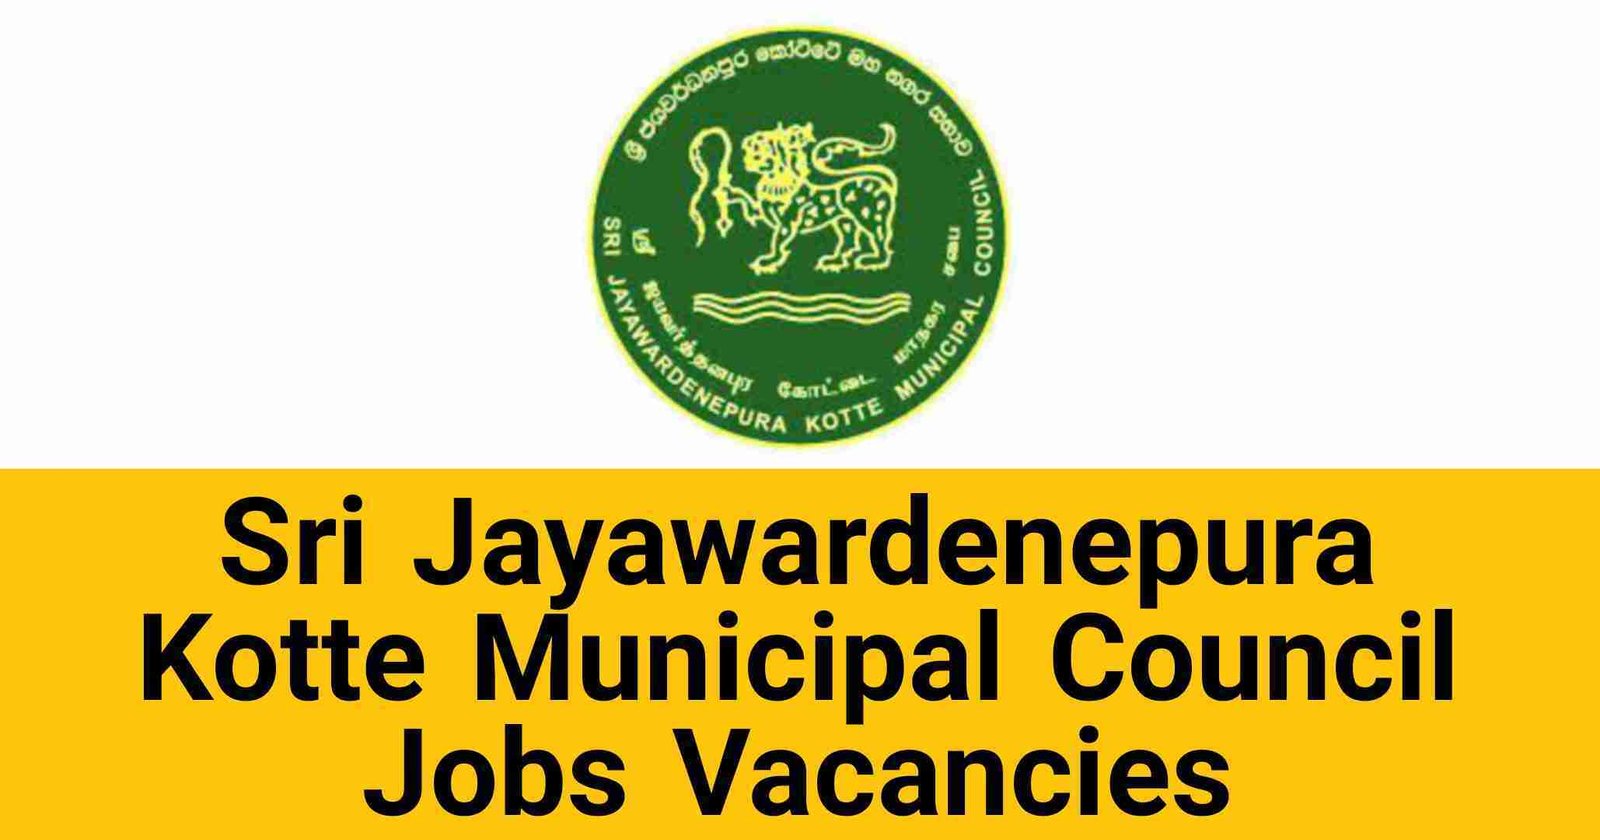 Sri Jayawardenepura Kotte Municipal Council Jobs Vacancies